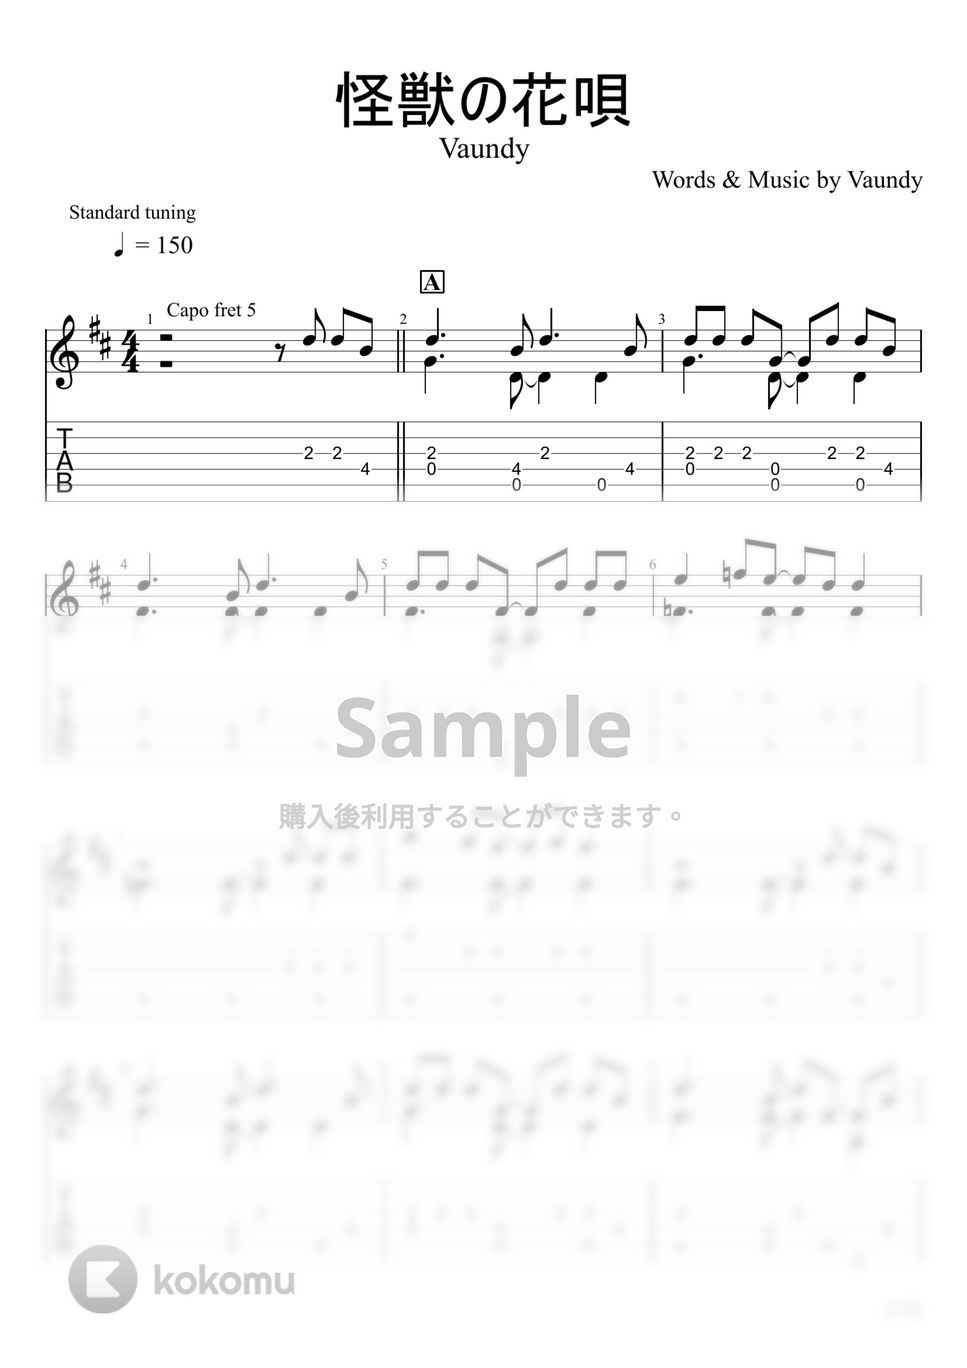 Vaundy - 怪獣の花唄 (ソロギター) by u3danchou